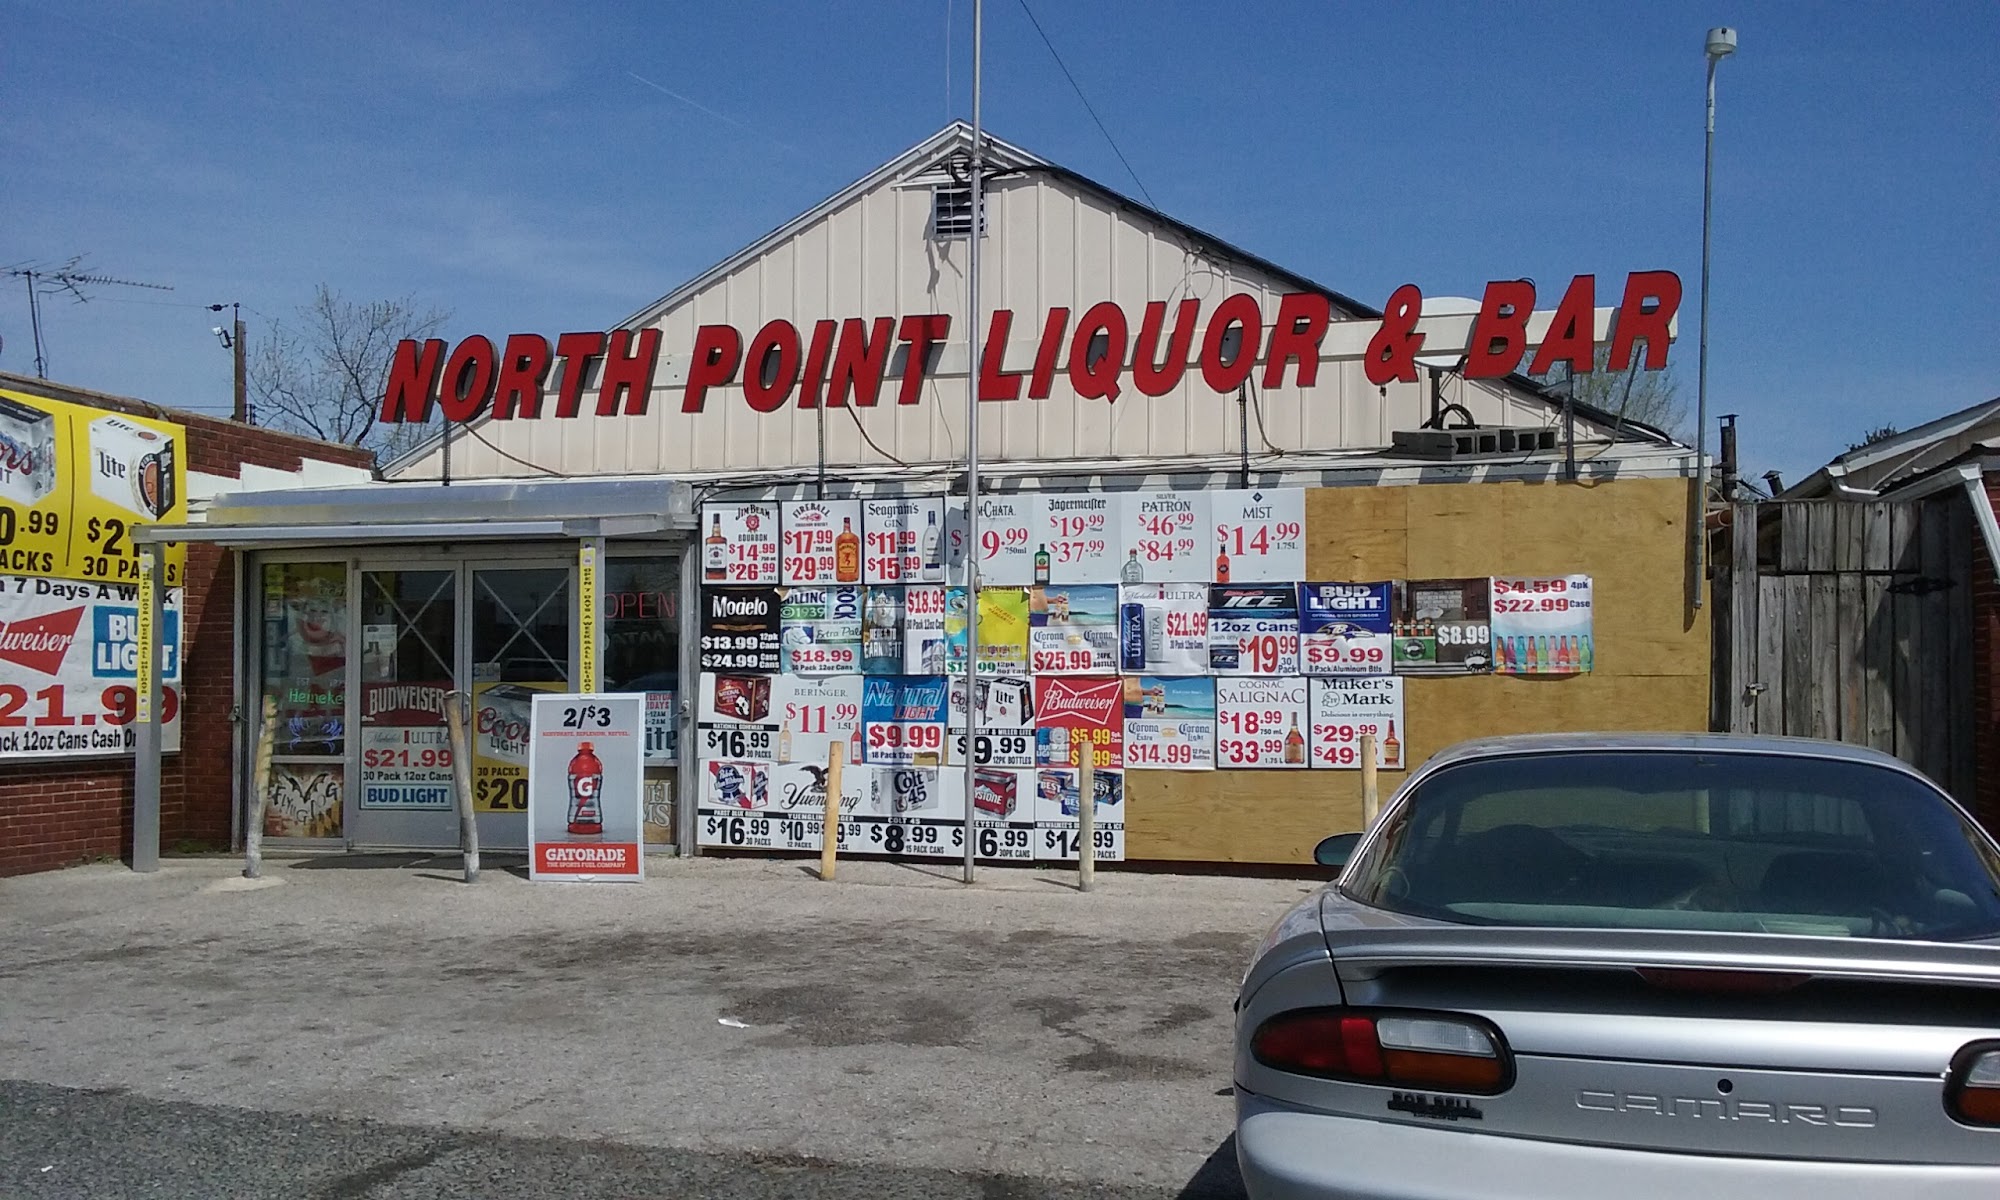 North Point Liquor & Bar